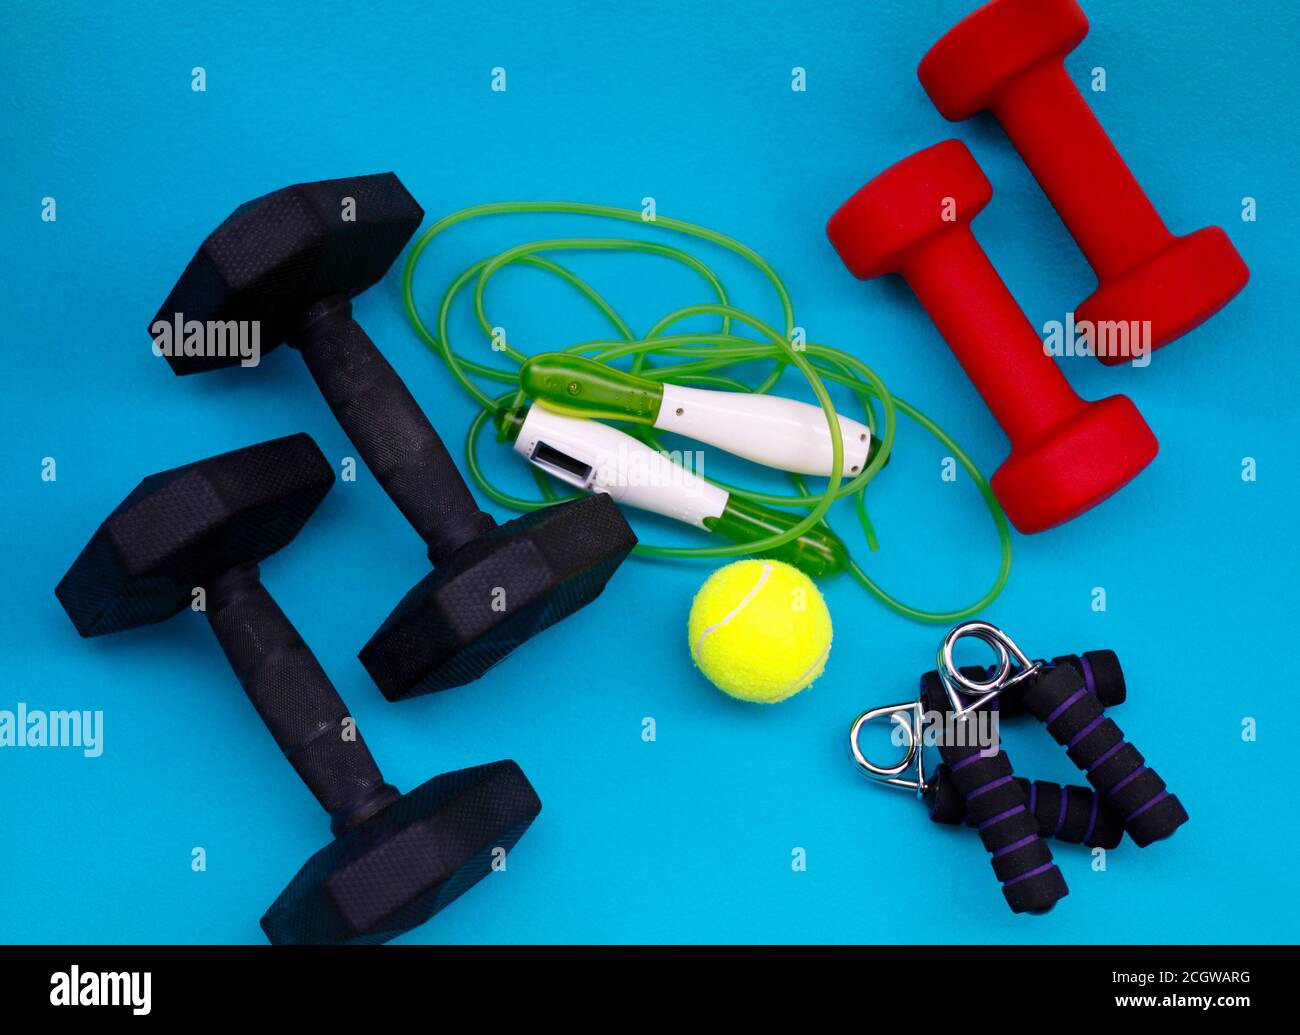 Exercise equipment. Weights, jump rope, tennis ball, hand grip strengthener Stock Photo